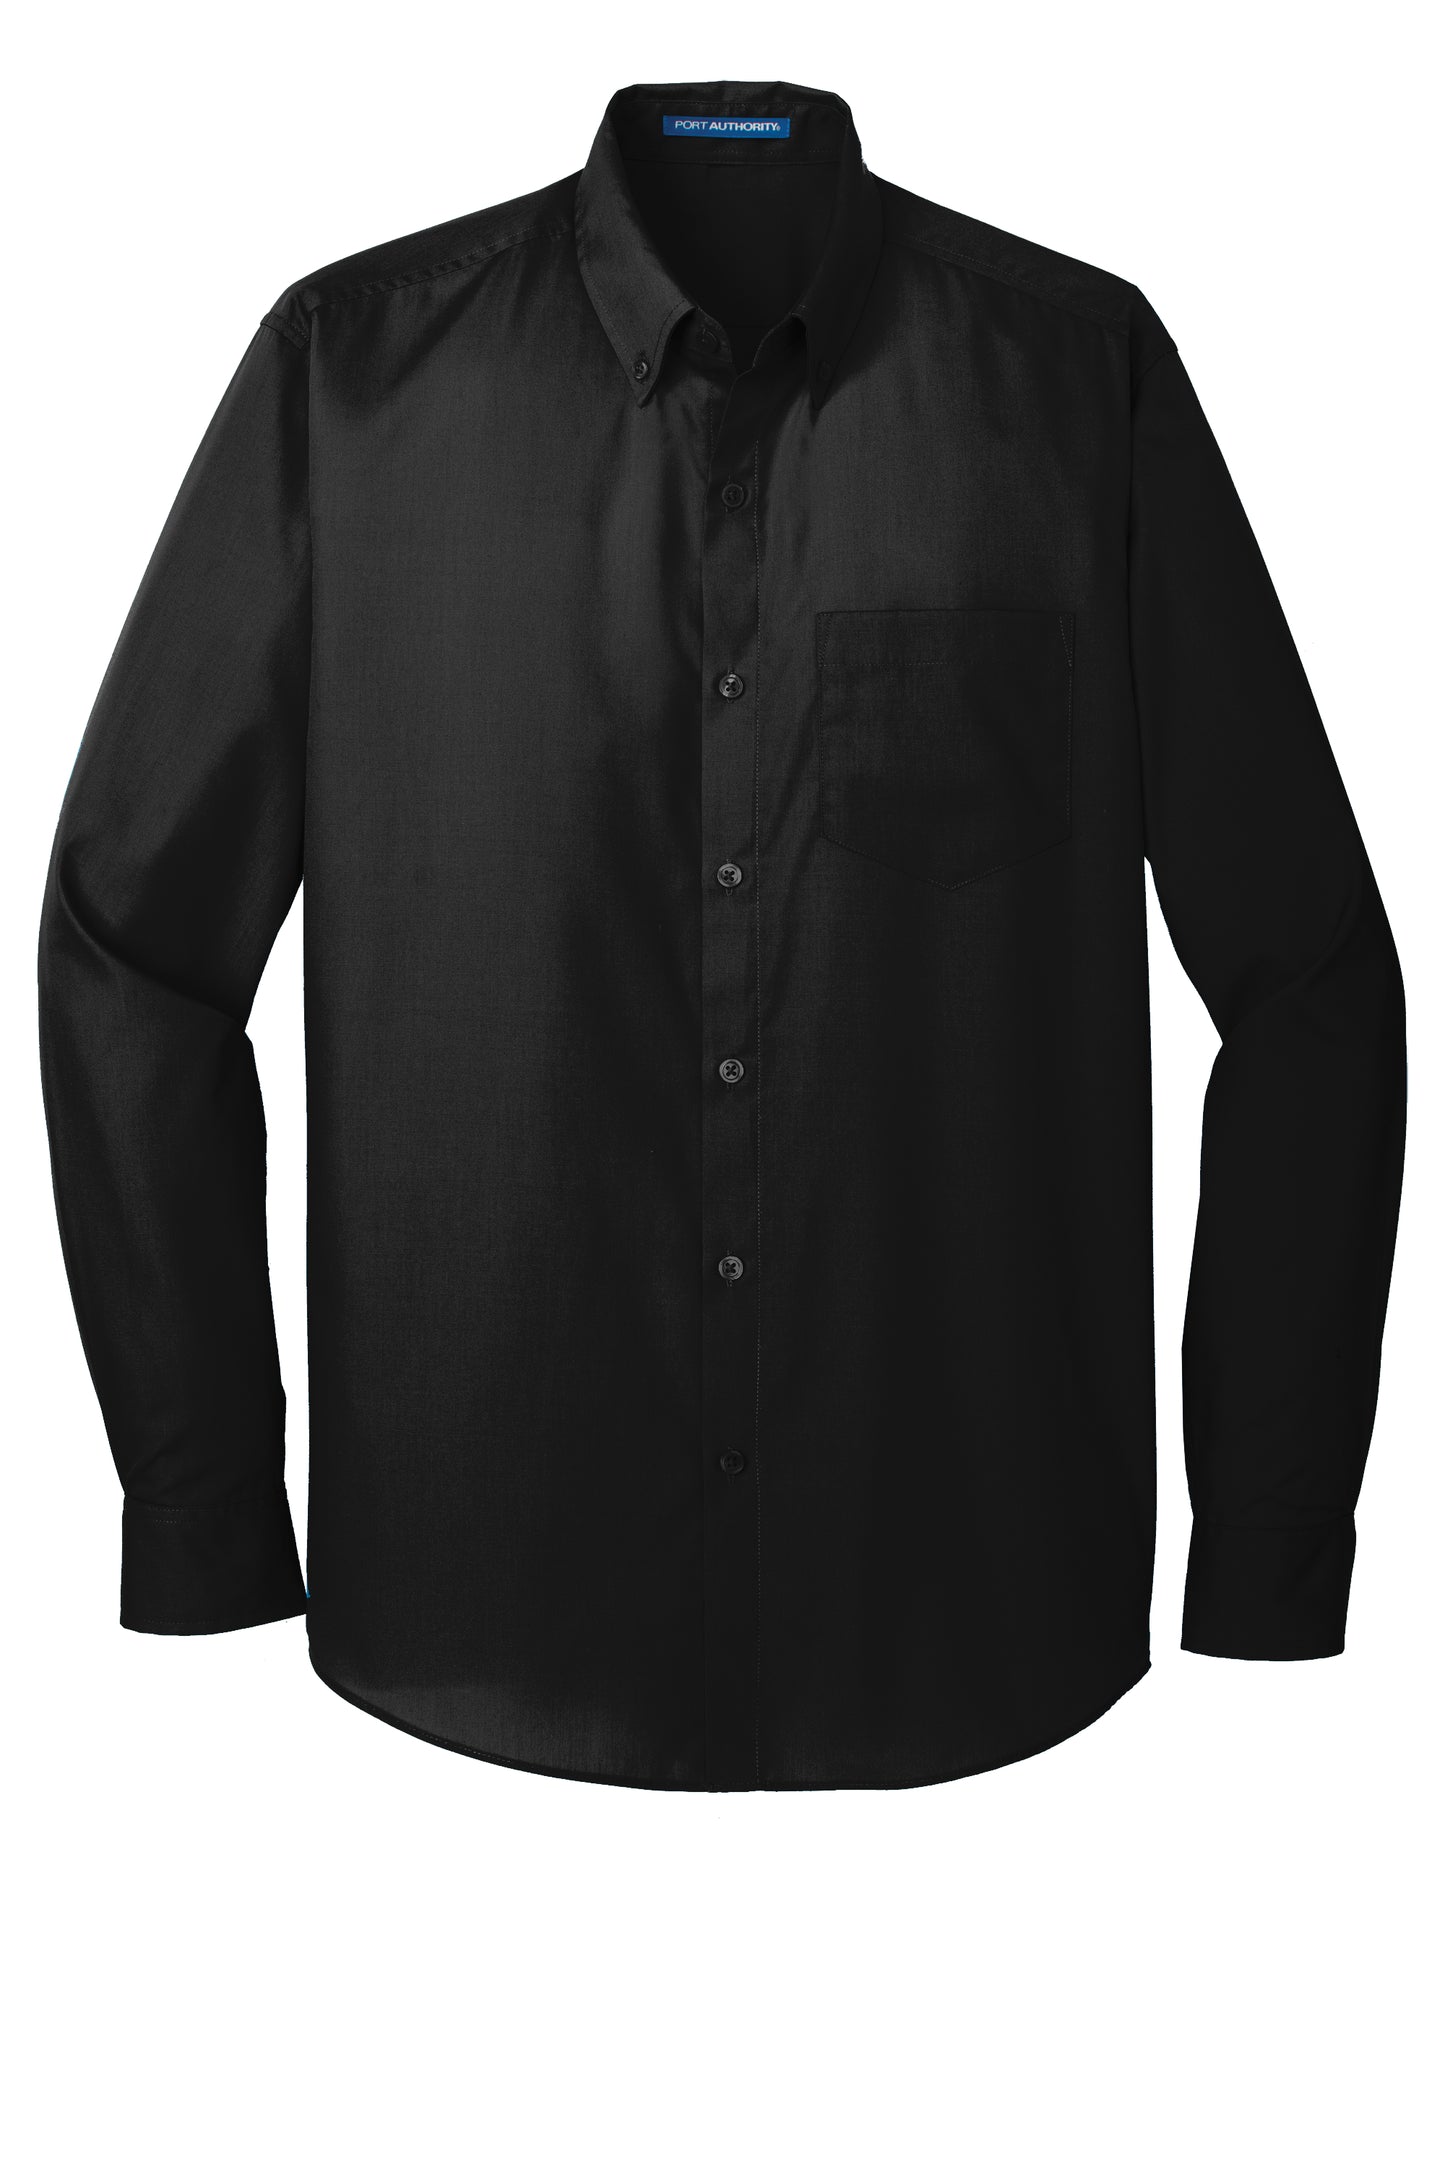 port authority long sleeve carefree poplin shirt deep black